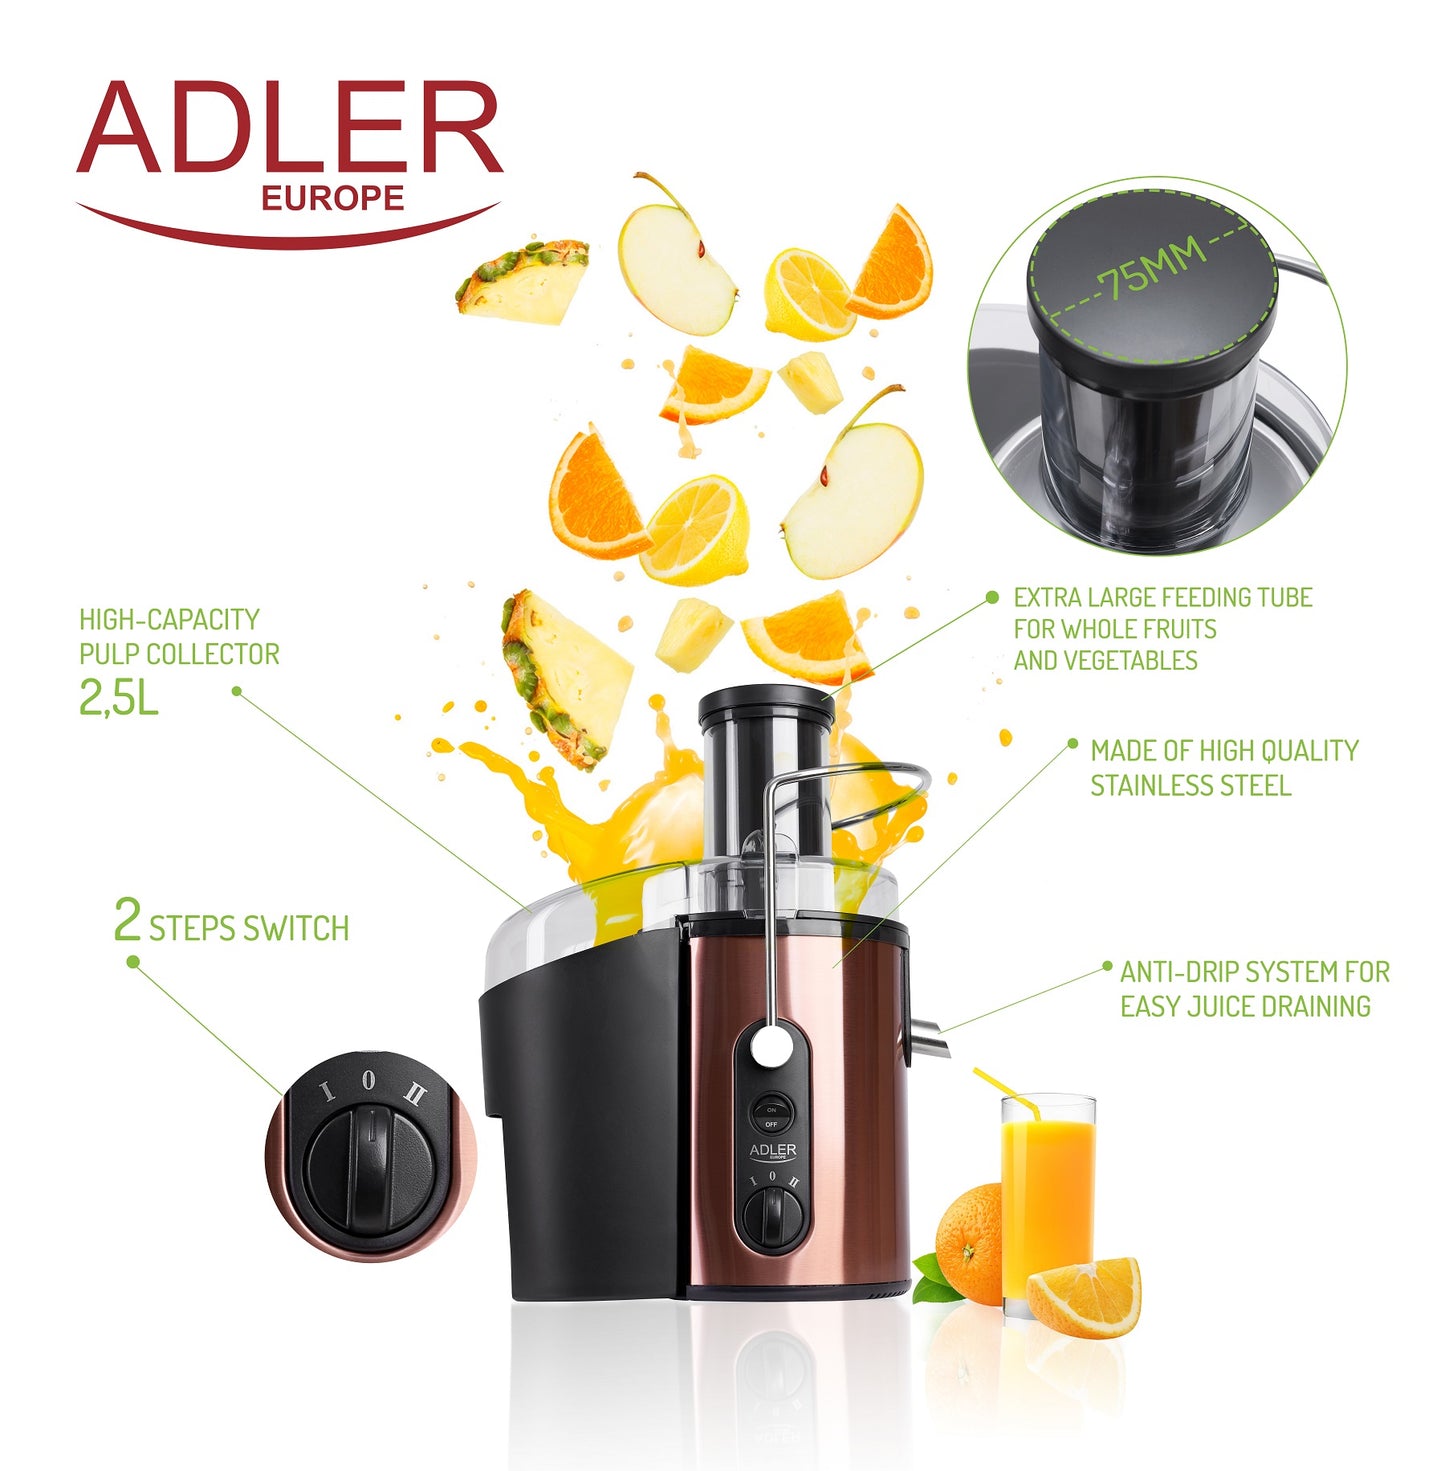 Adler AD4123 Juice extractor 800W